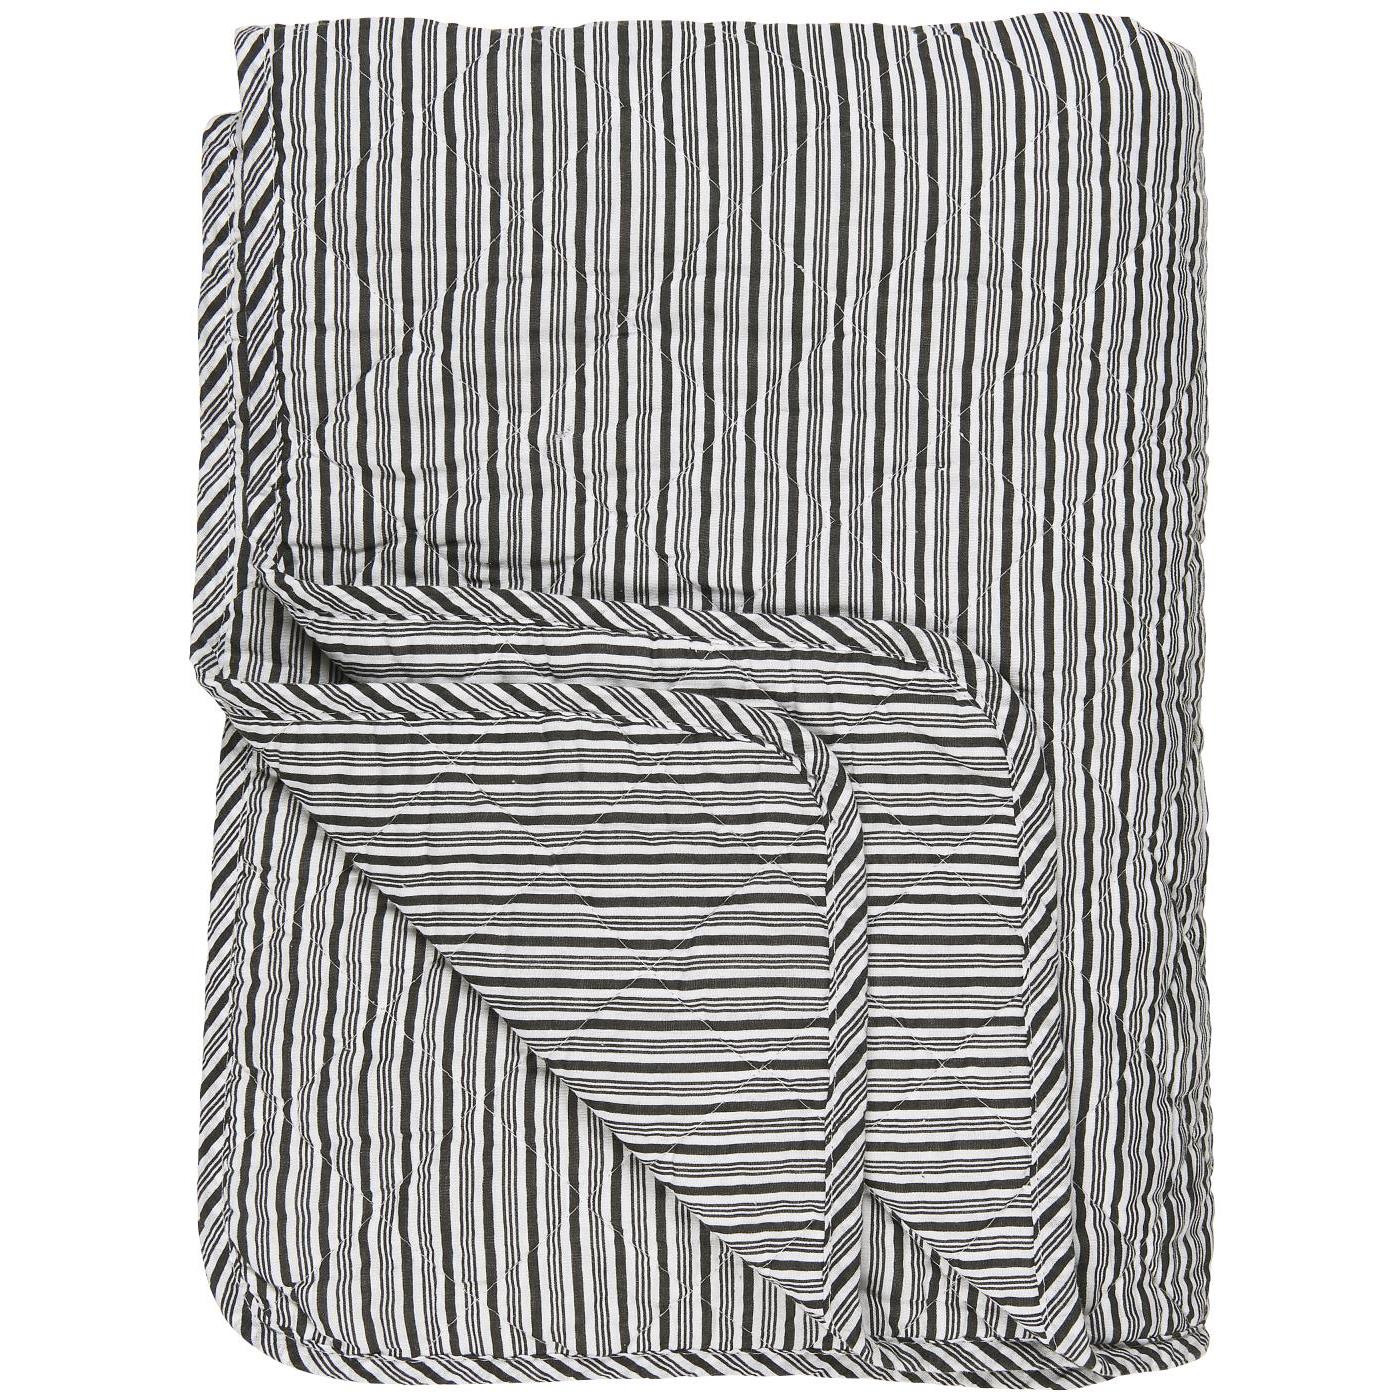 IB Laursen Quilt Plaid Decke Baumwolle 130 x 180 Streifen dunkelgrau grau